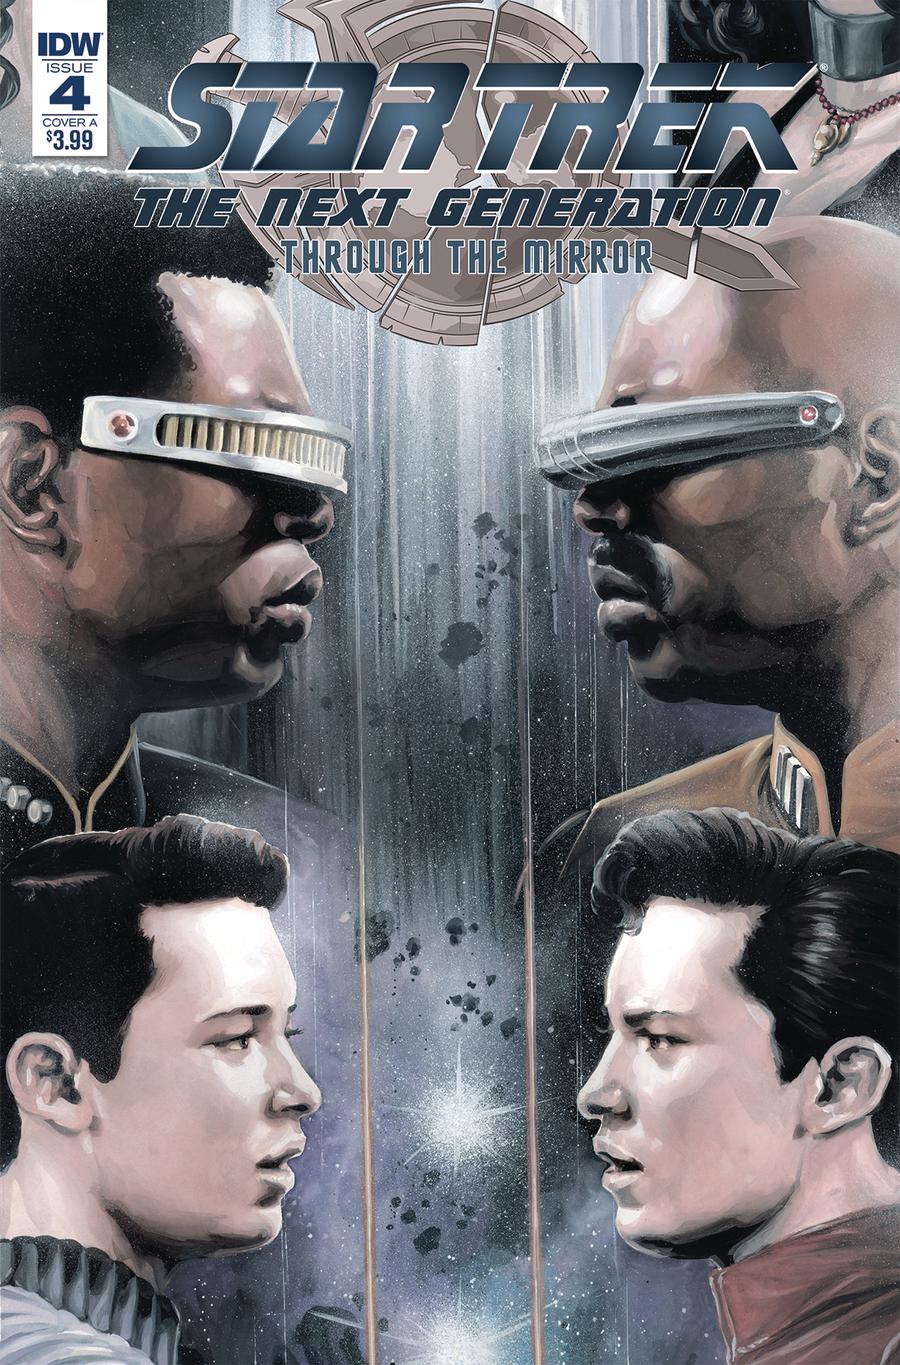 Star Trek The Next Generation Through The Mirror #4 Cover A Regular JK Woodward Cover